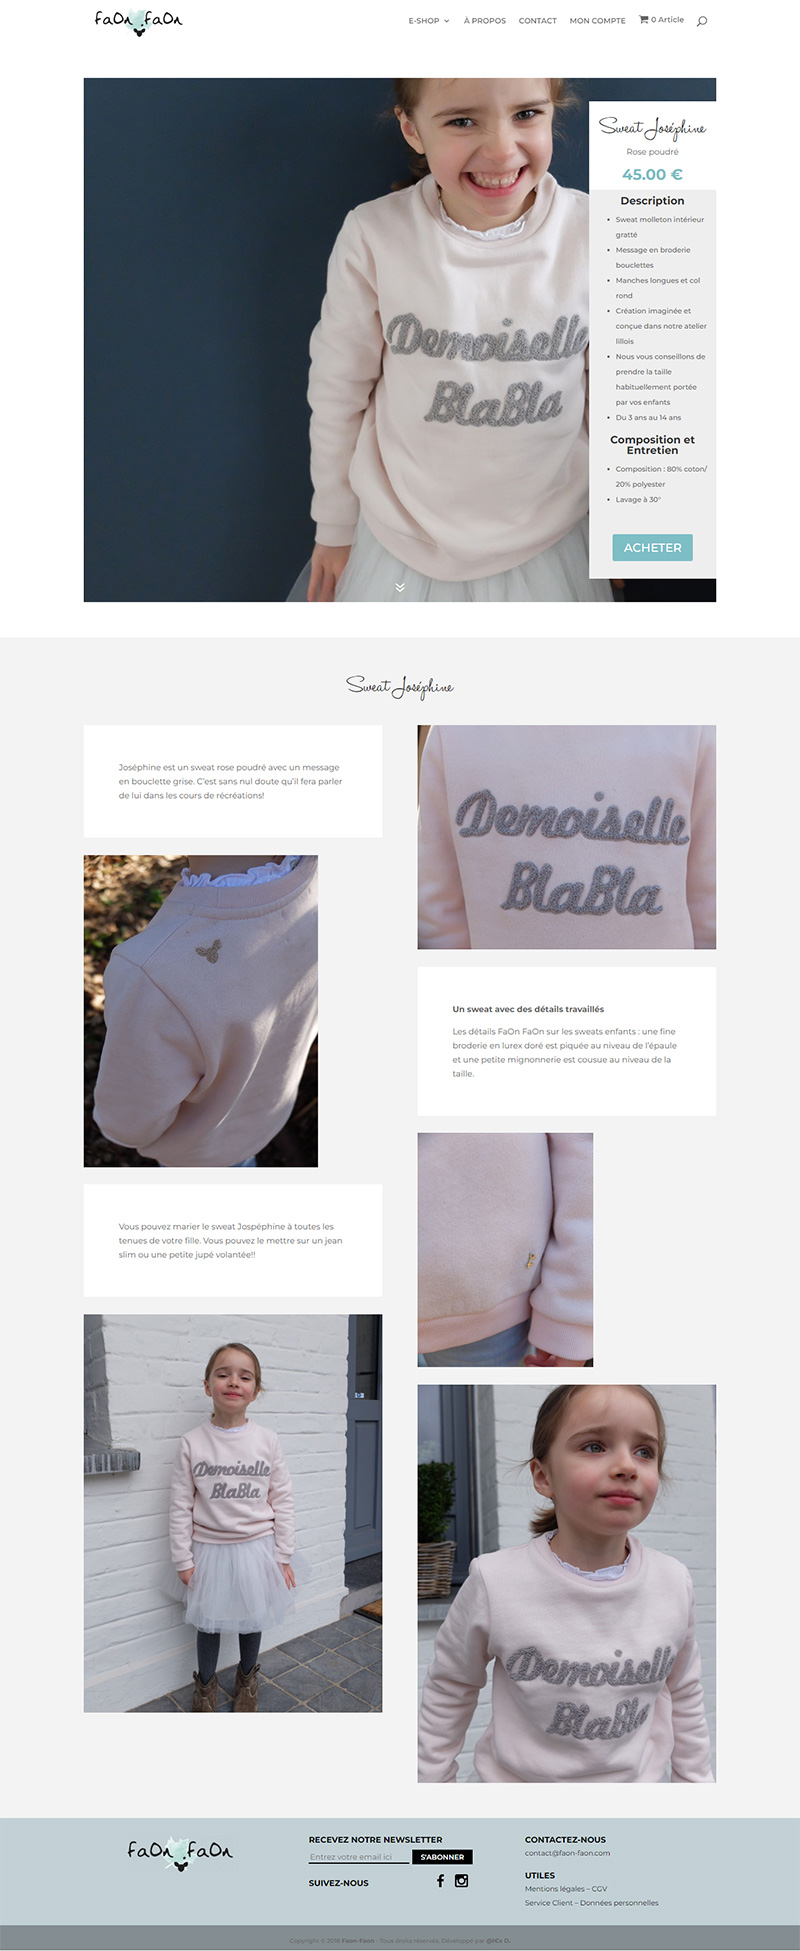 WPASIA CO. LTD. Portfolio Faon Faon Product Dress page